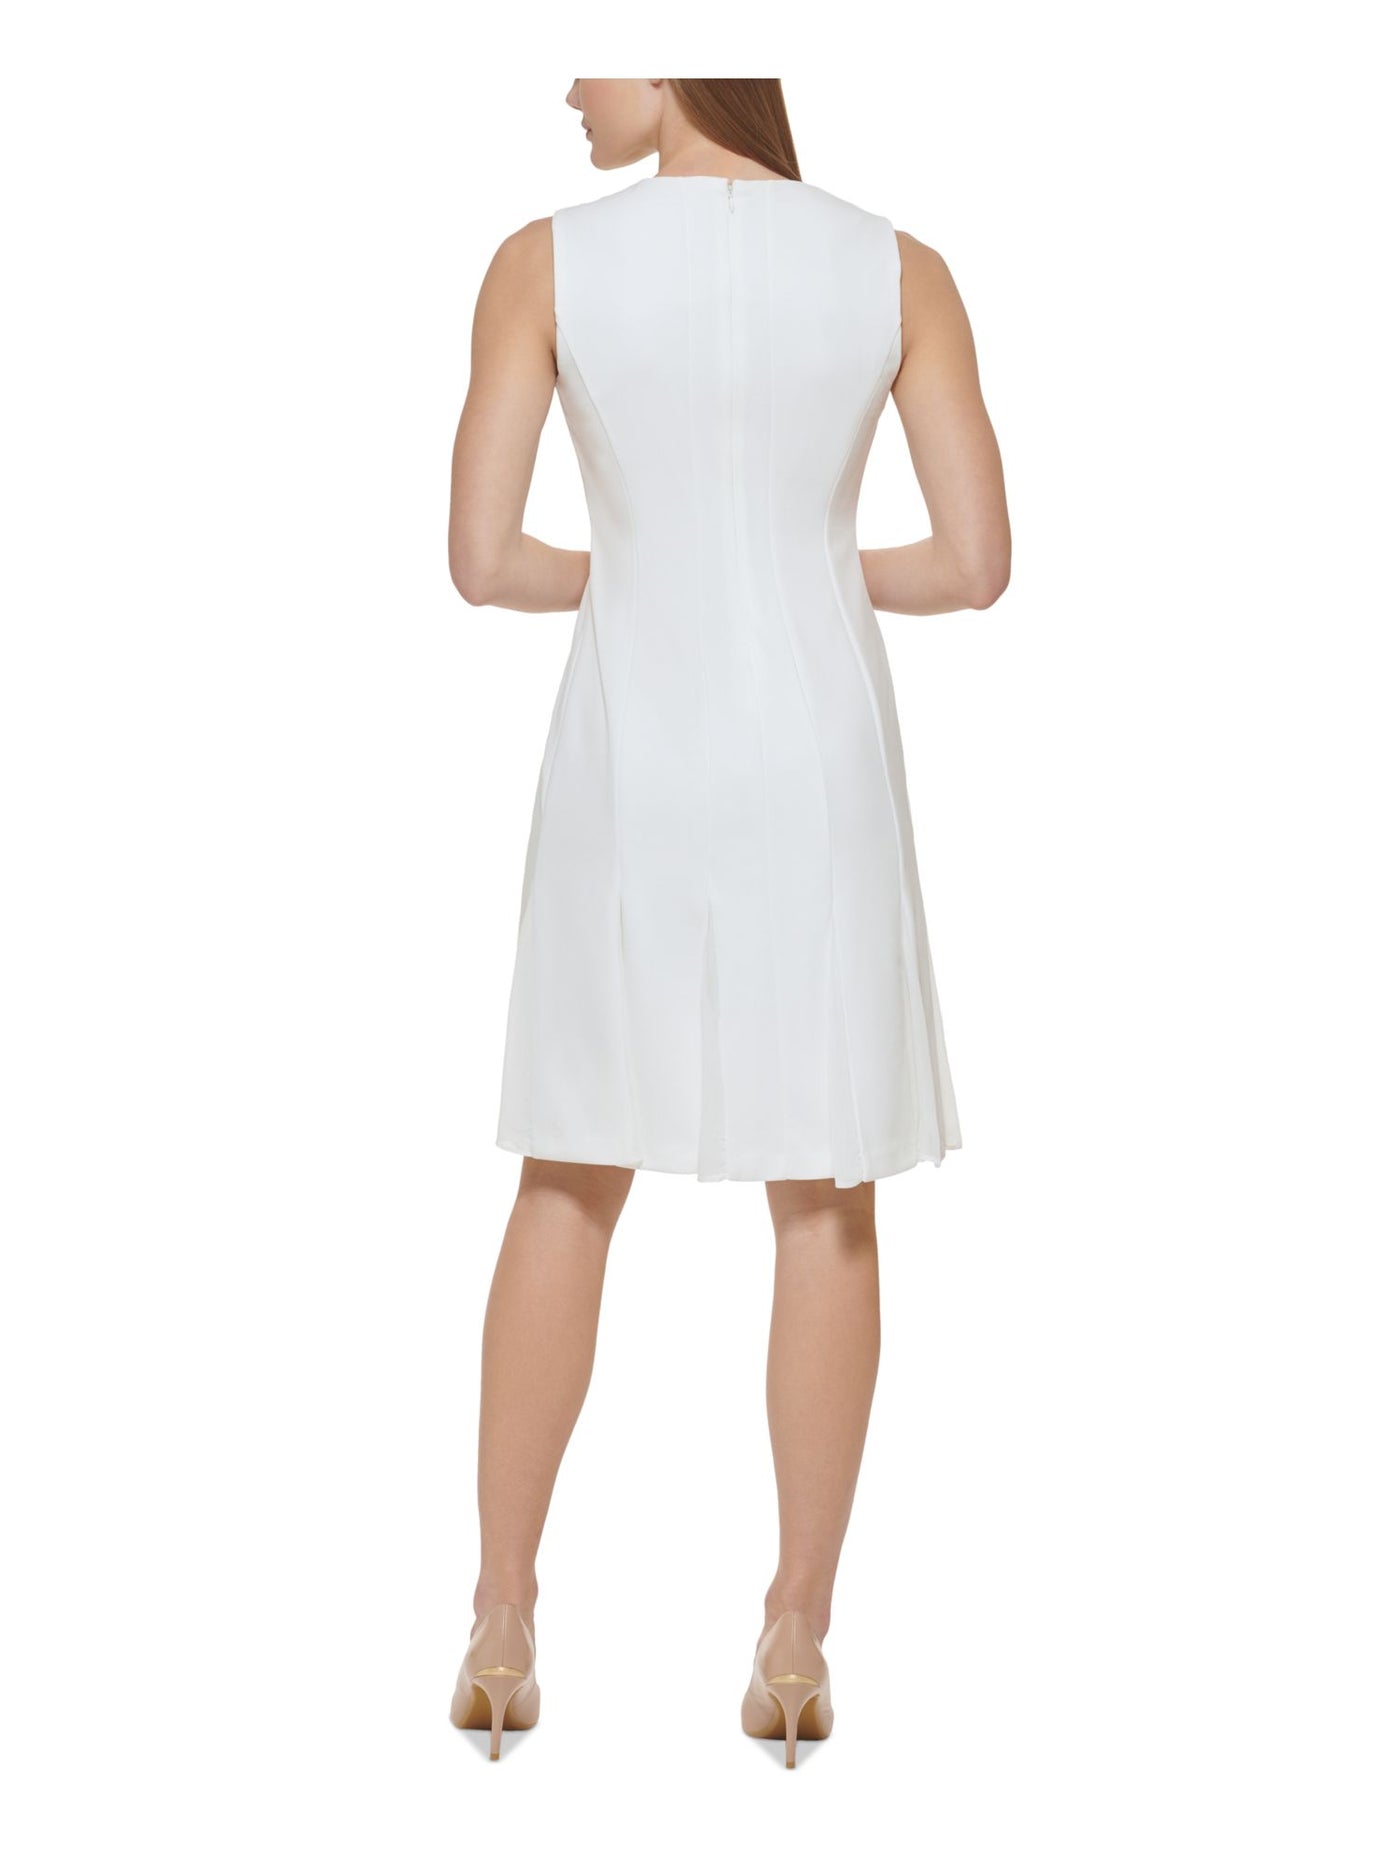 CALVIN KLEIN Womens Ivory Zippered Chiffon Godet Skirt Insets Lined Sleeveless Round Neck Above The Knee Sheath Dress 4